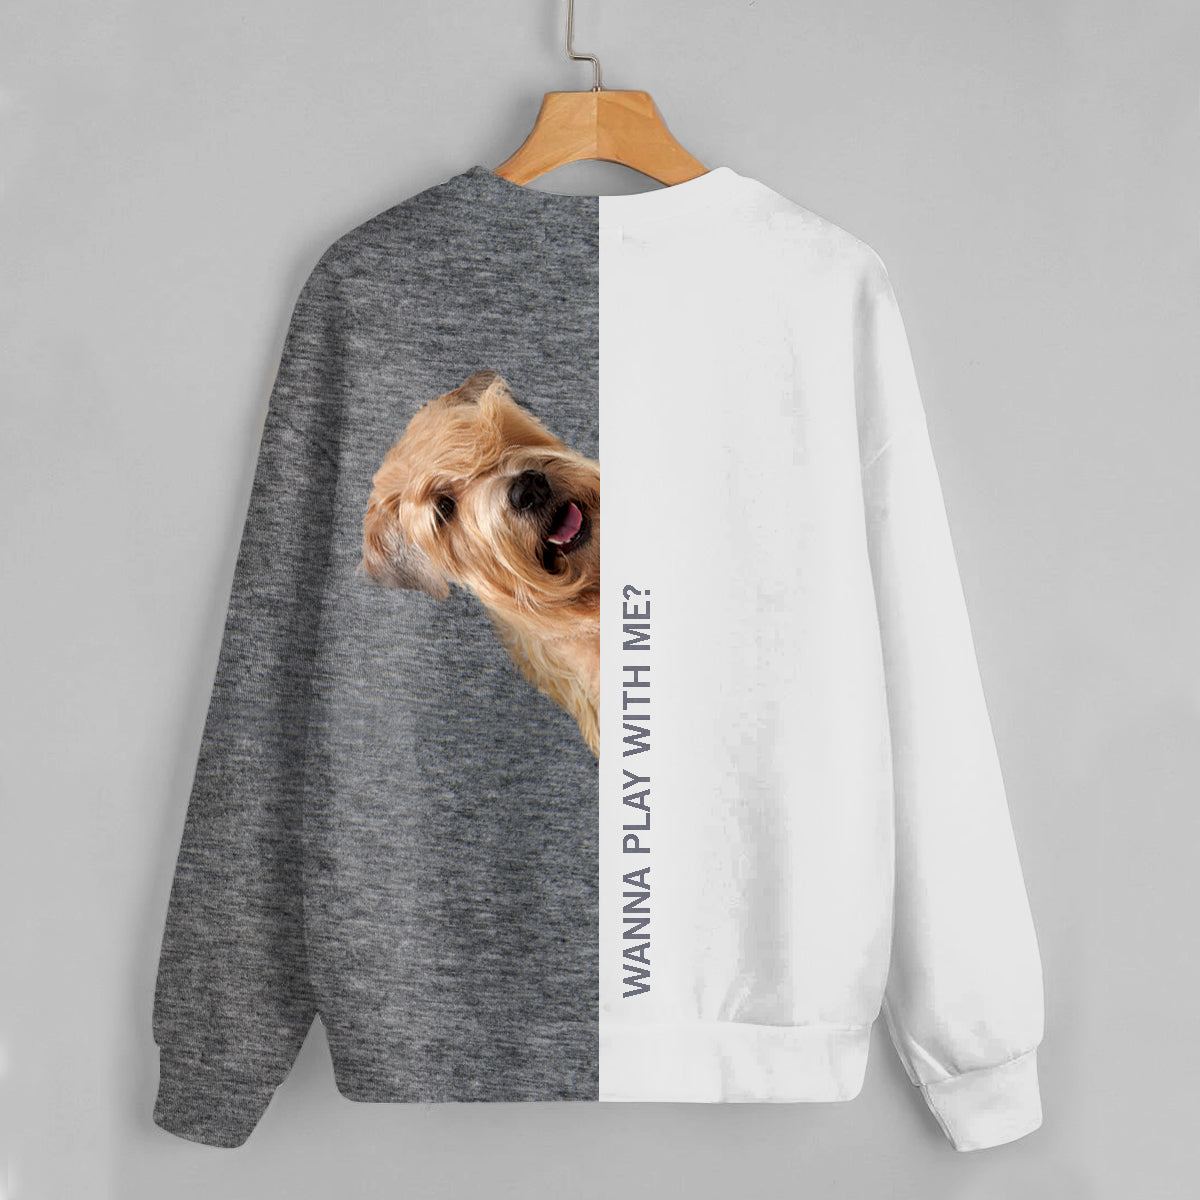 Funny Happy Time - Wheaten Terrier Sweatshirt V1